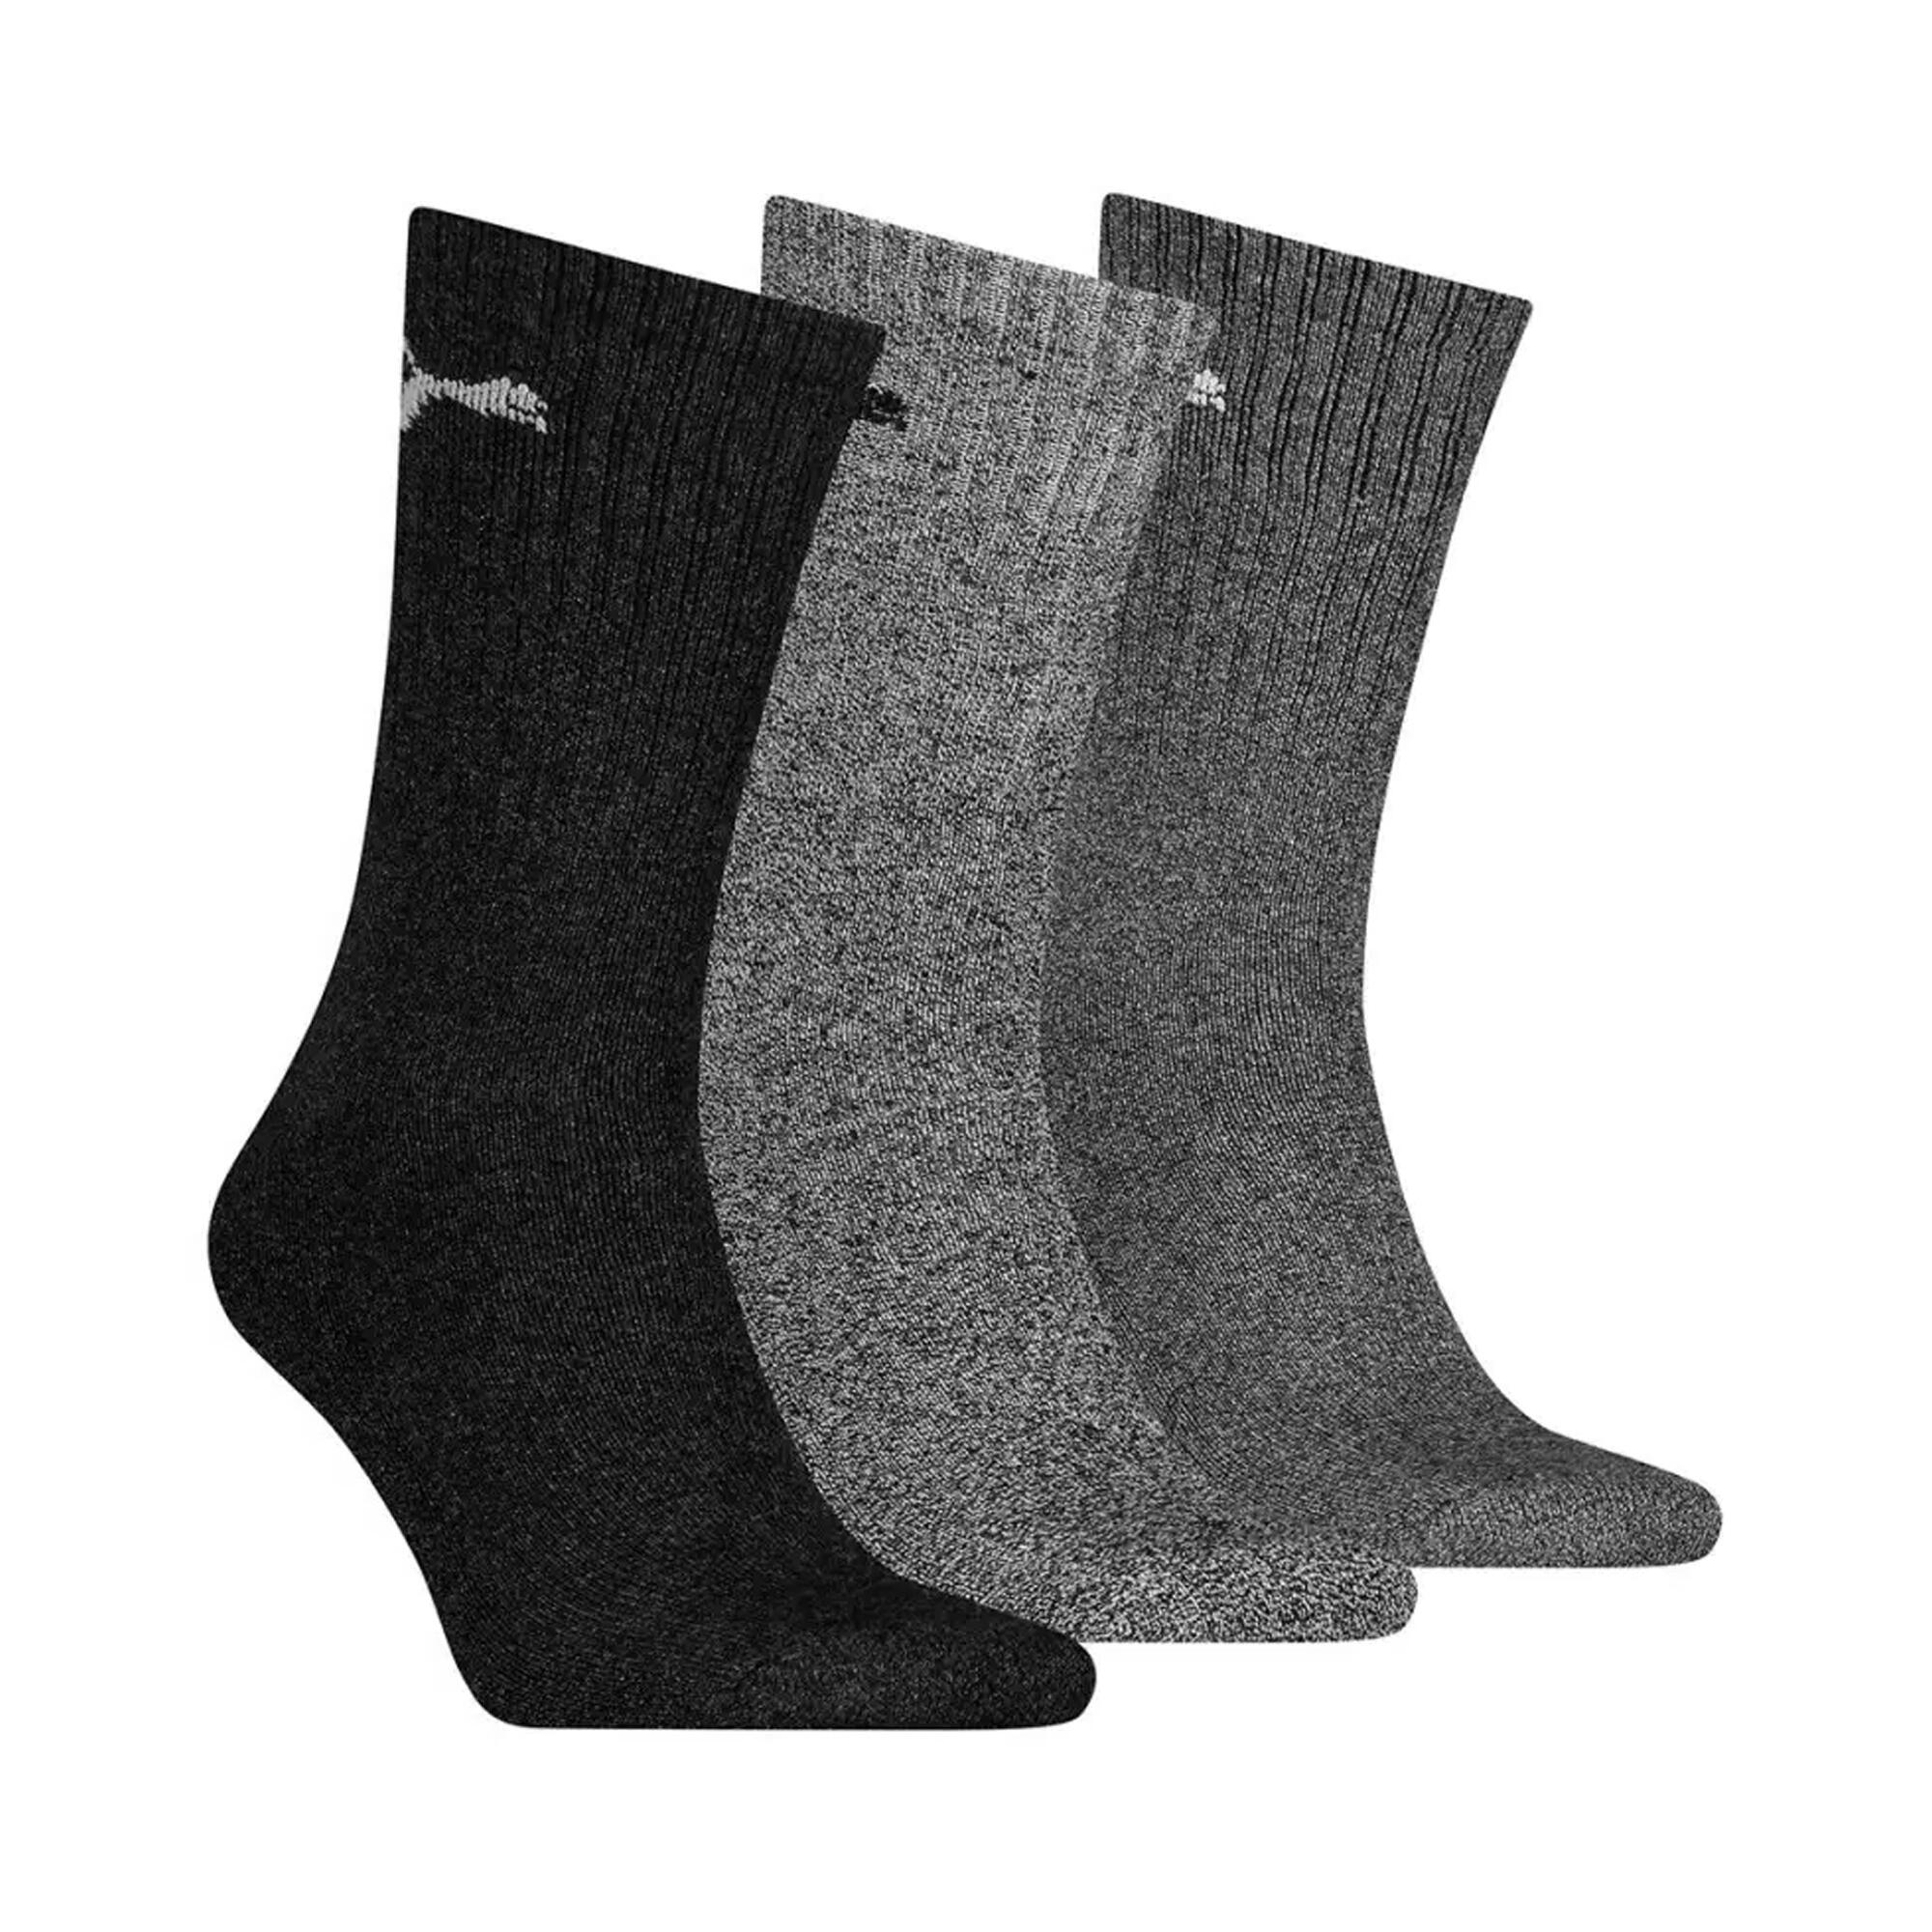 Unisex Adult Crew Sports Socks (Pack of 3) (Grey) 2/3